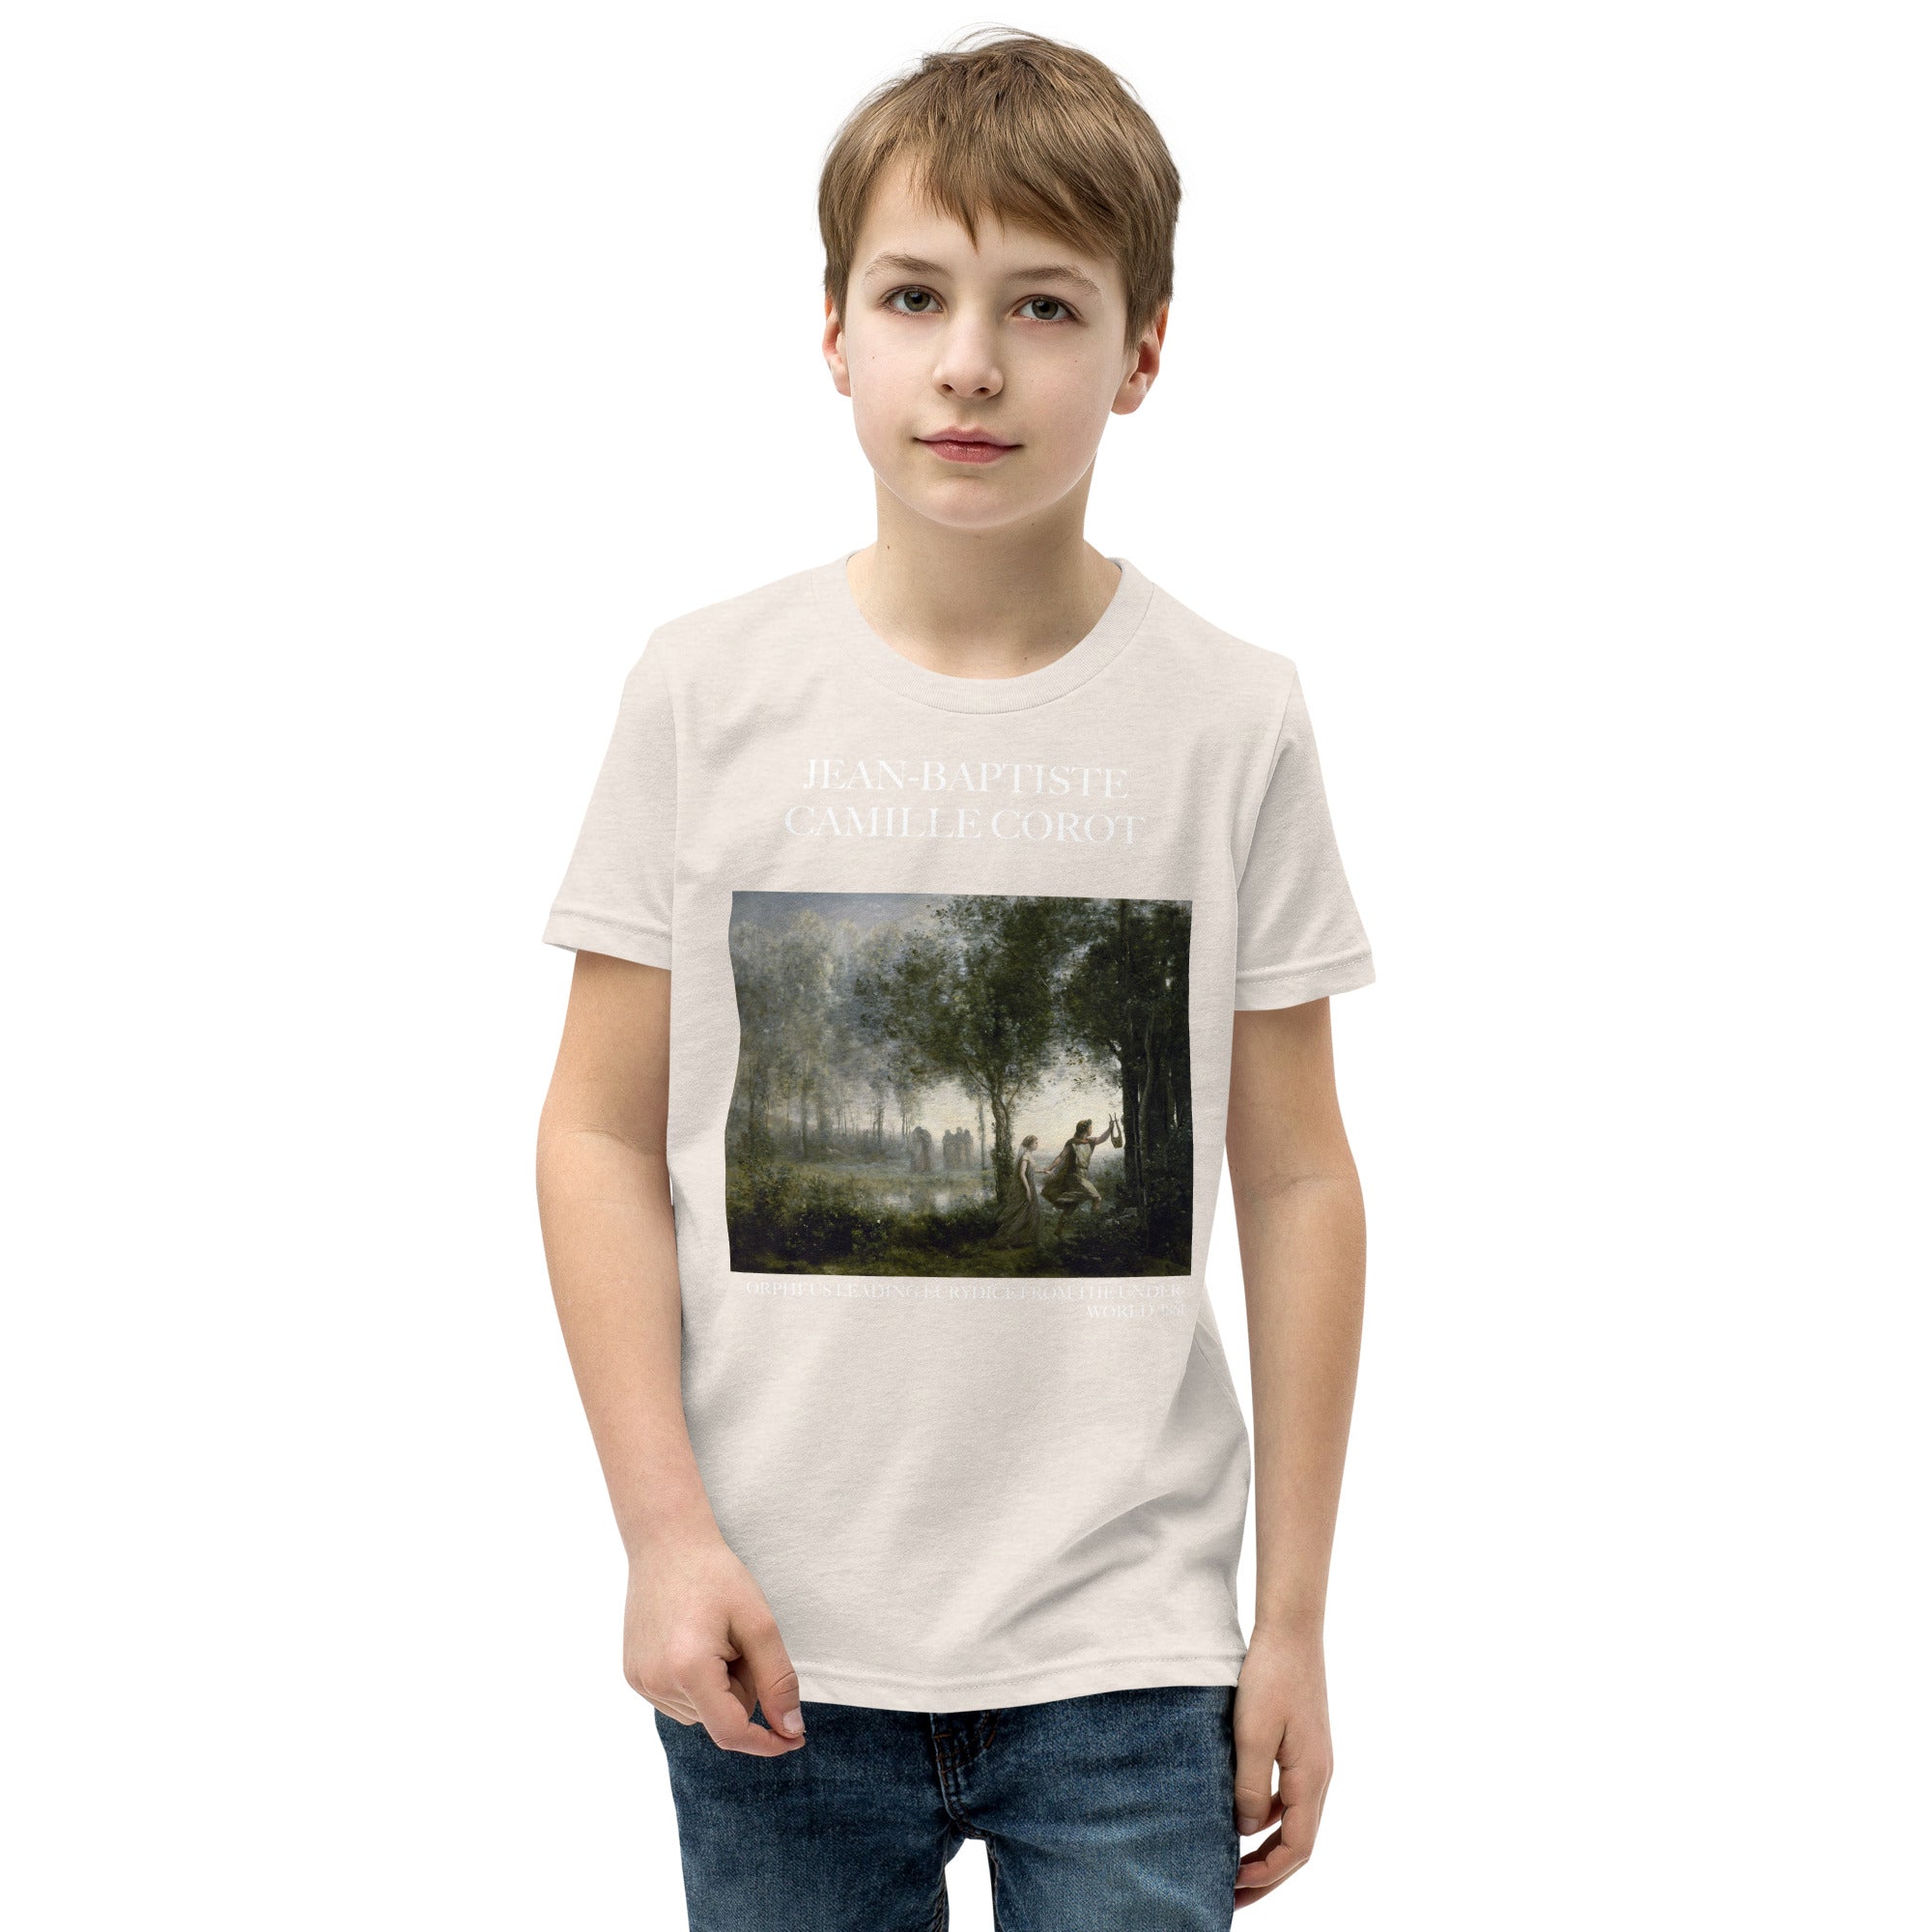 Jean-Baptiste Camille Corot 'Orpheus führt Eurydike aus der Unterwelt' Berühmtes Gemälde Kurzärmeliges T-Shirt | Premium Jugend Art T-Shirt